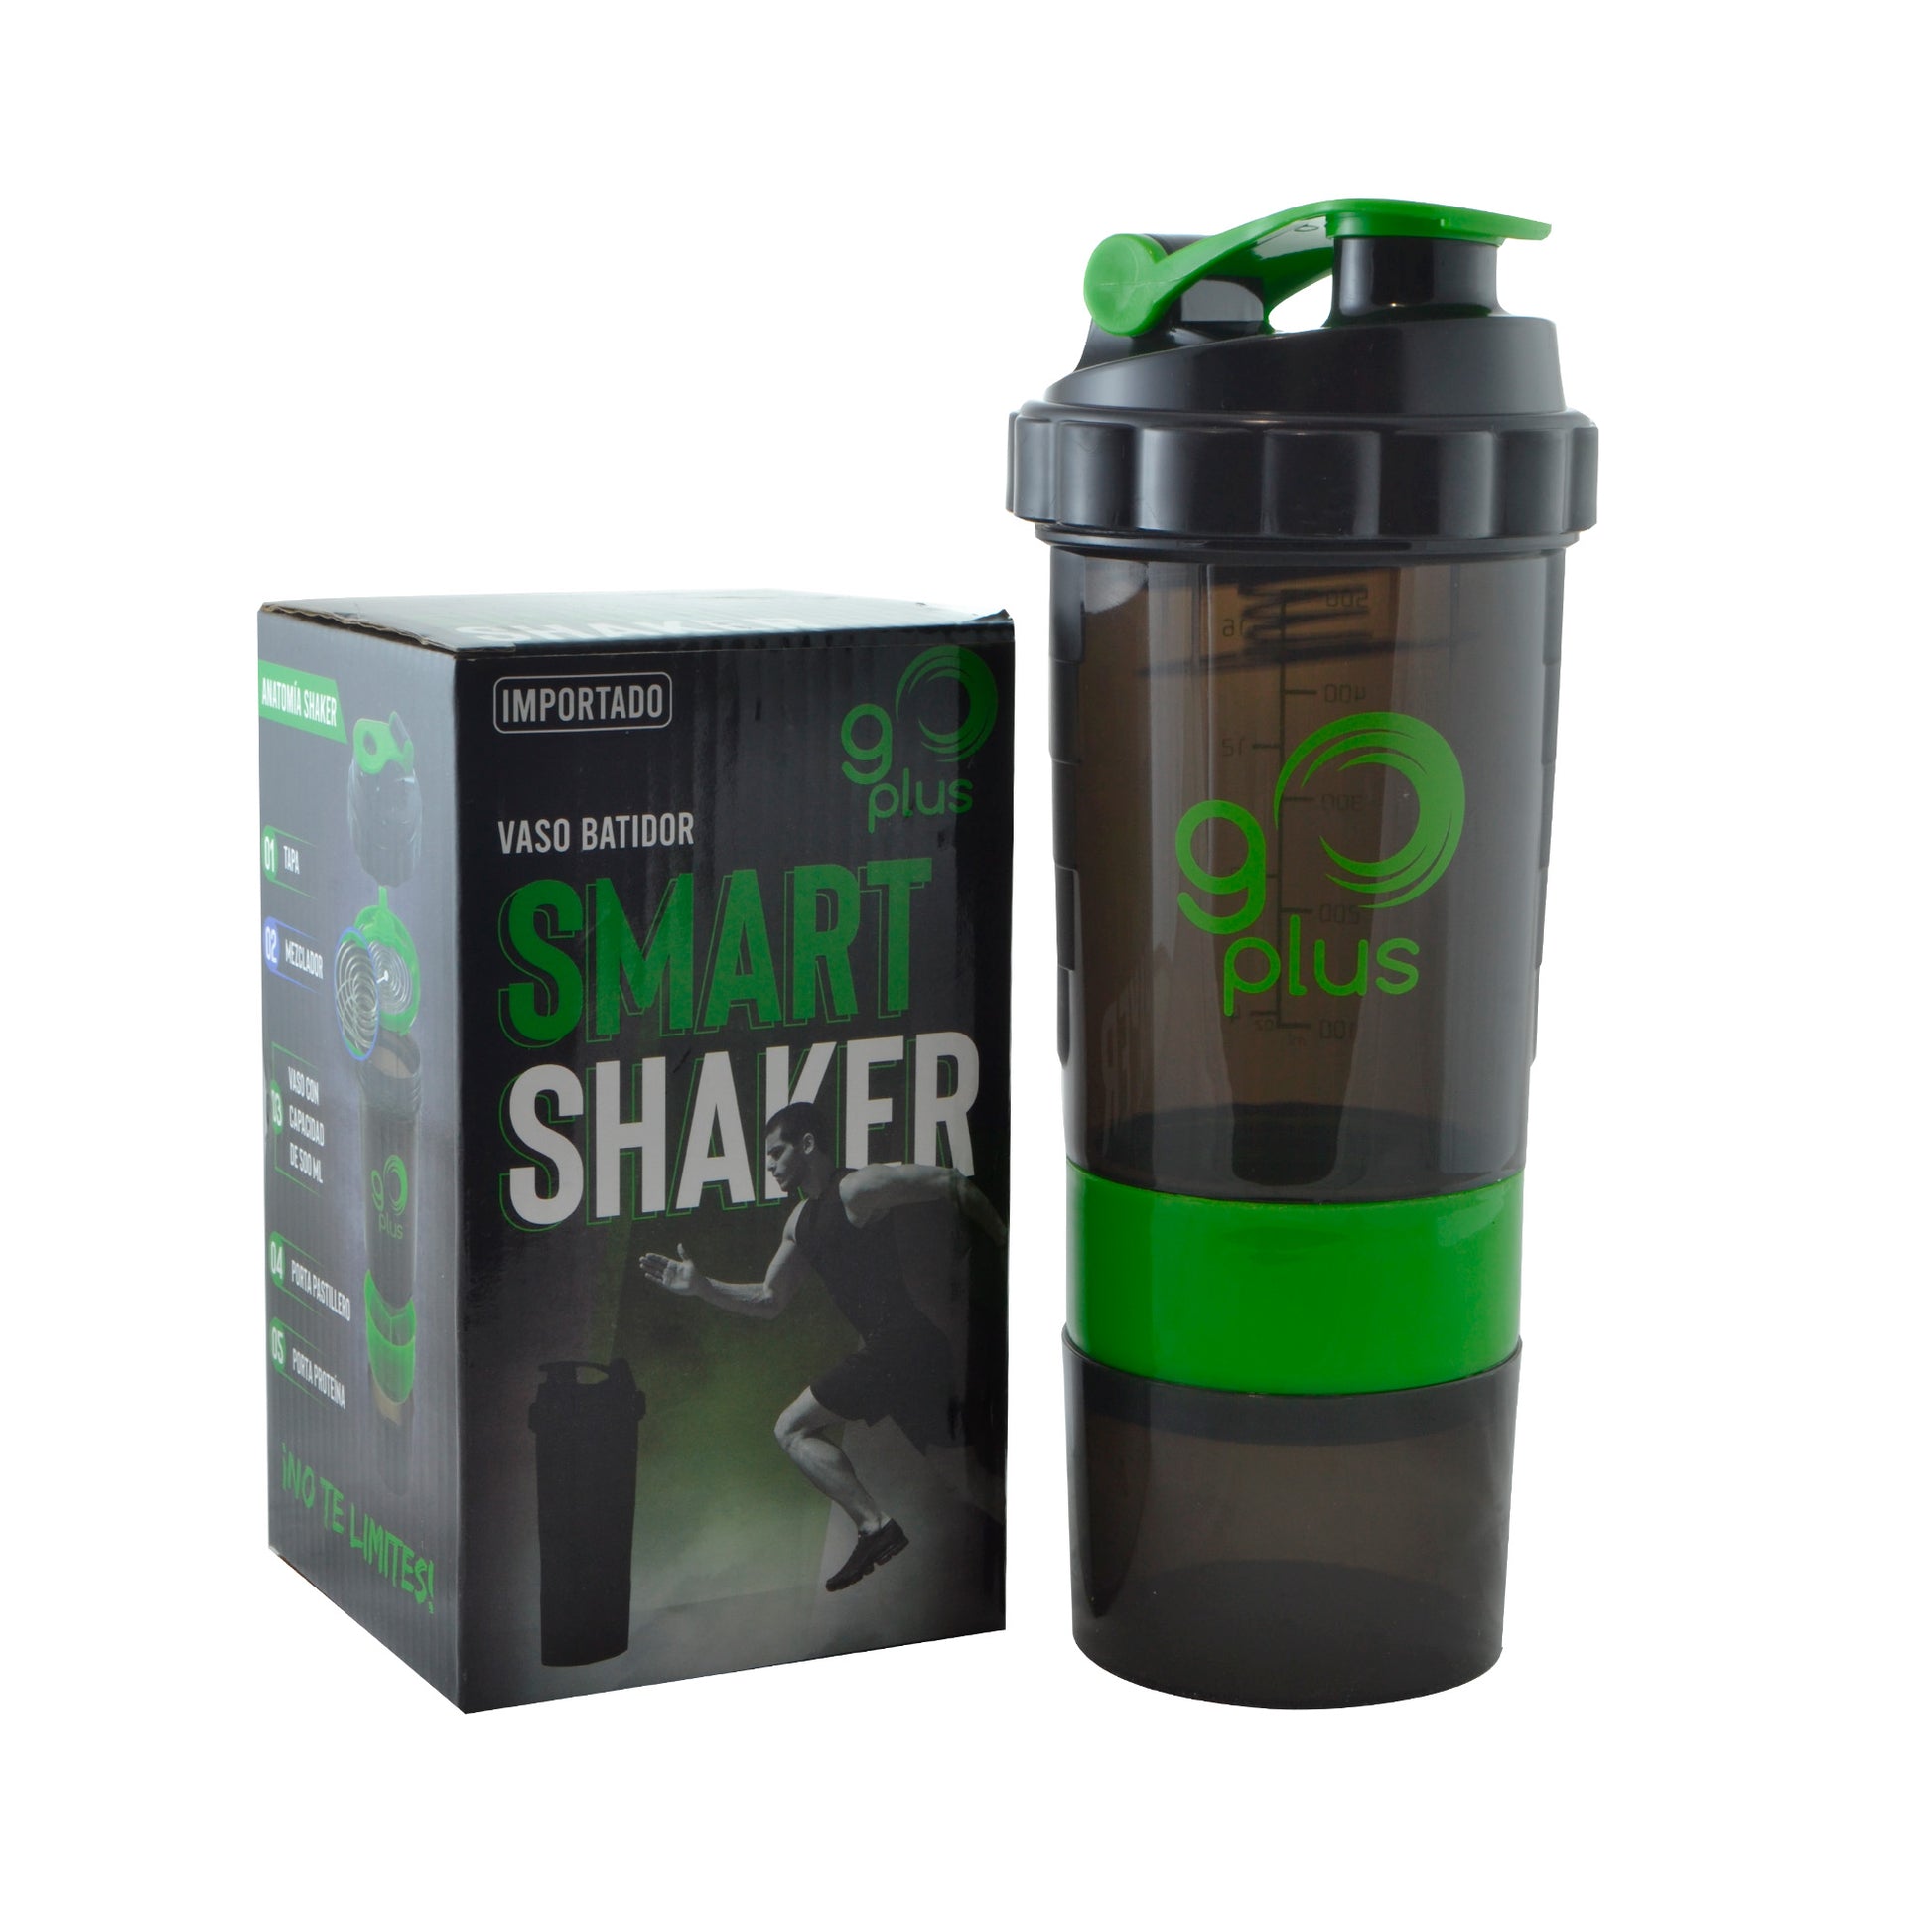 Vaso Mezclador Shaker Deportivo Proteina Suplemento Gym